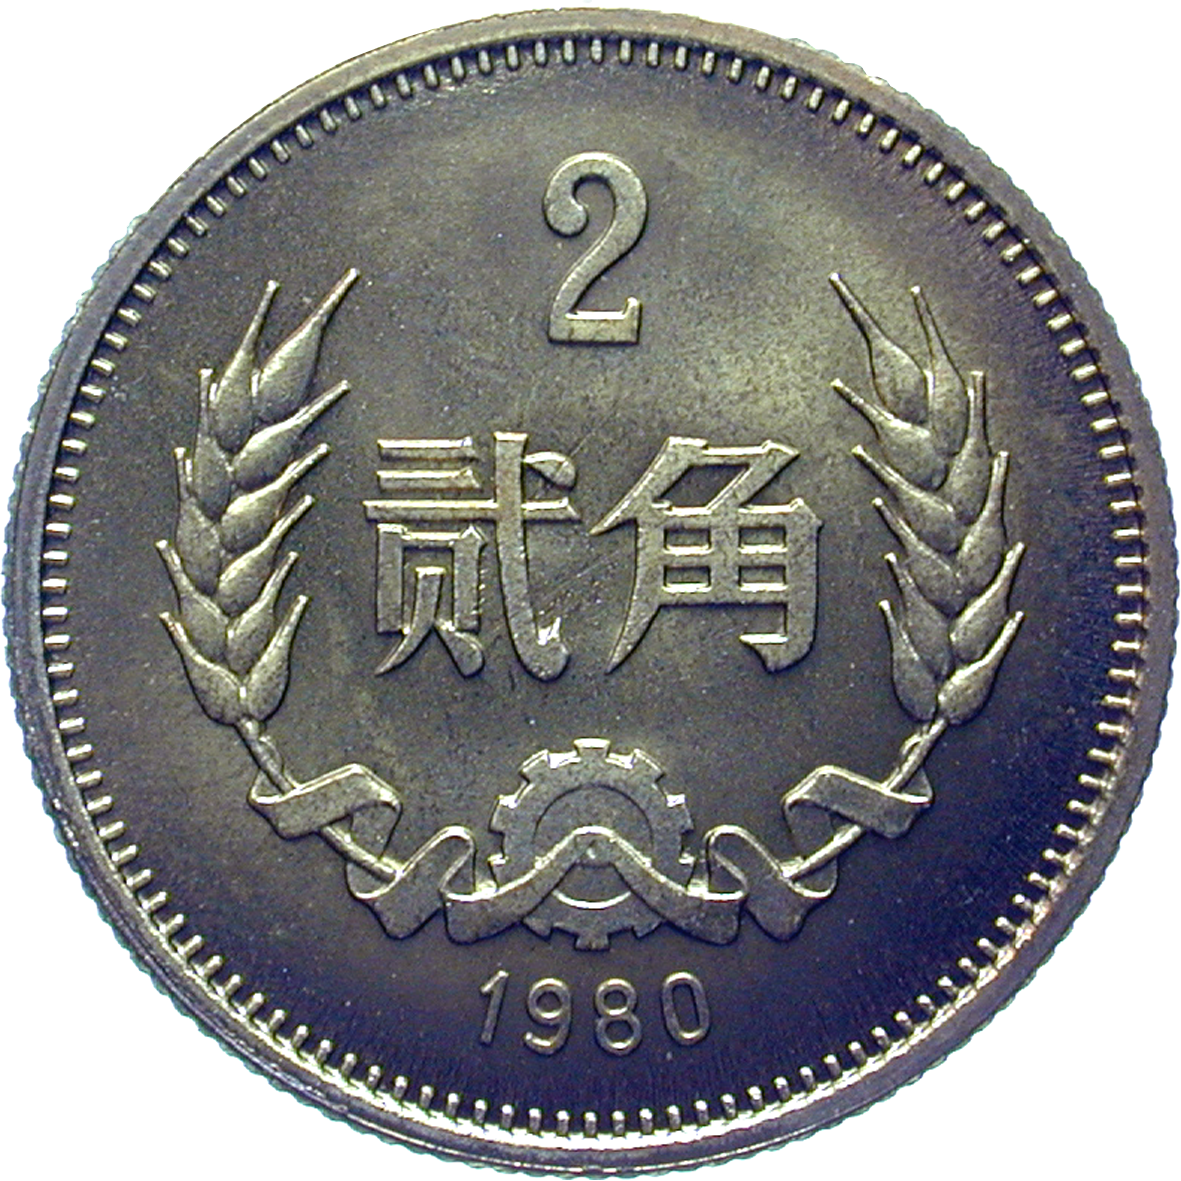 Volksrepublik China, 2 Jiao 1980 (reverse)